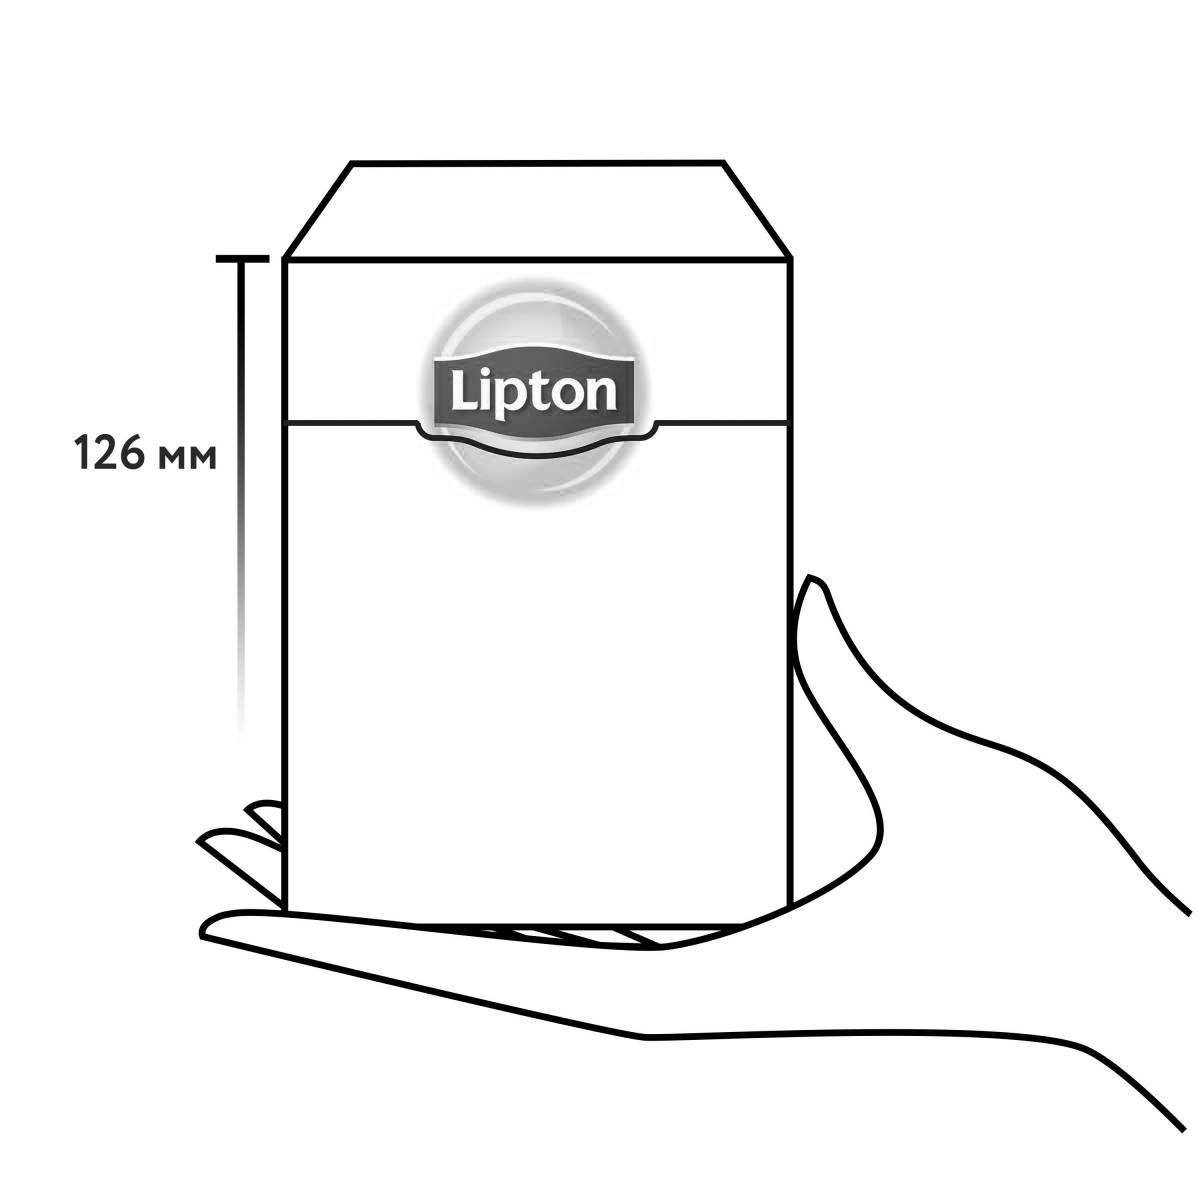 Сказочная страница раскраски lipton